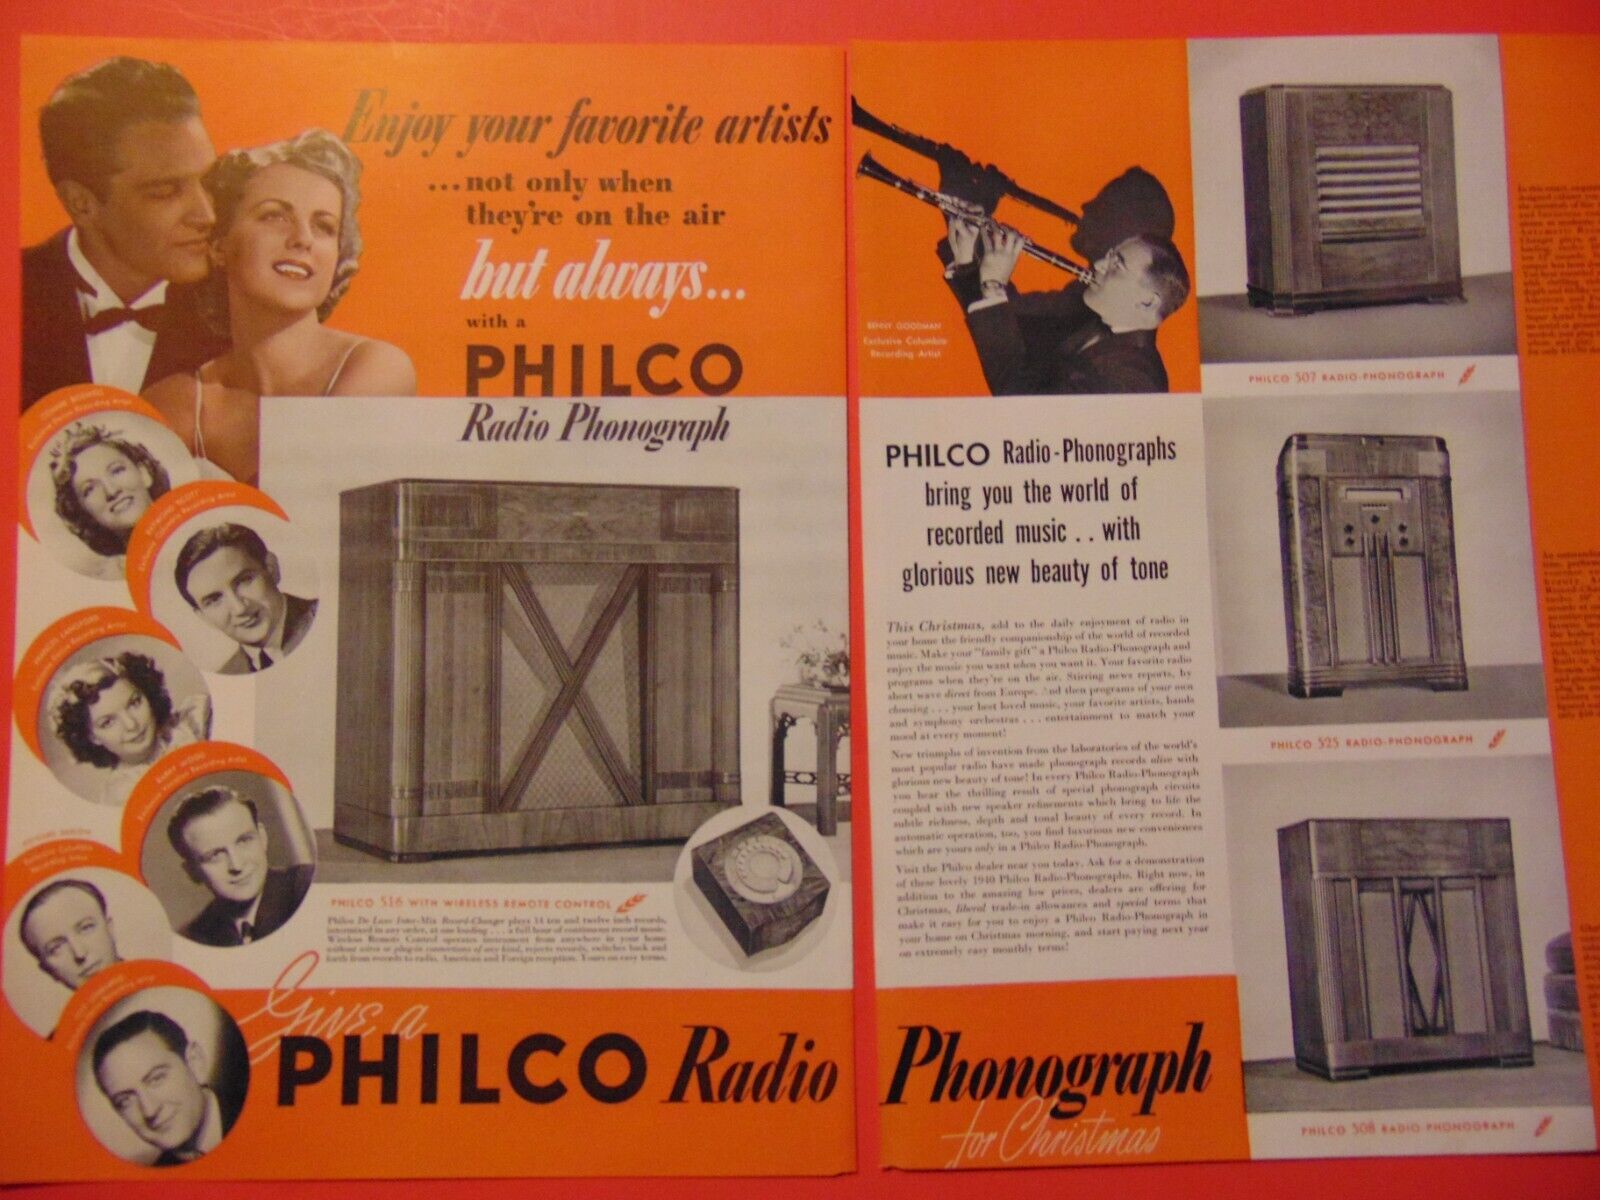 1939 PHILCO RADIO PHONOGRAPH photo art print ad